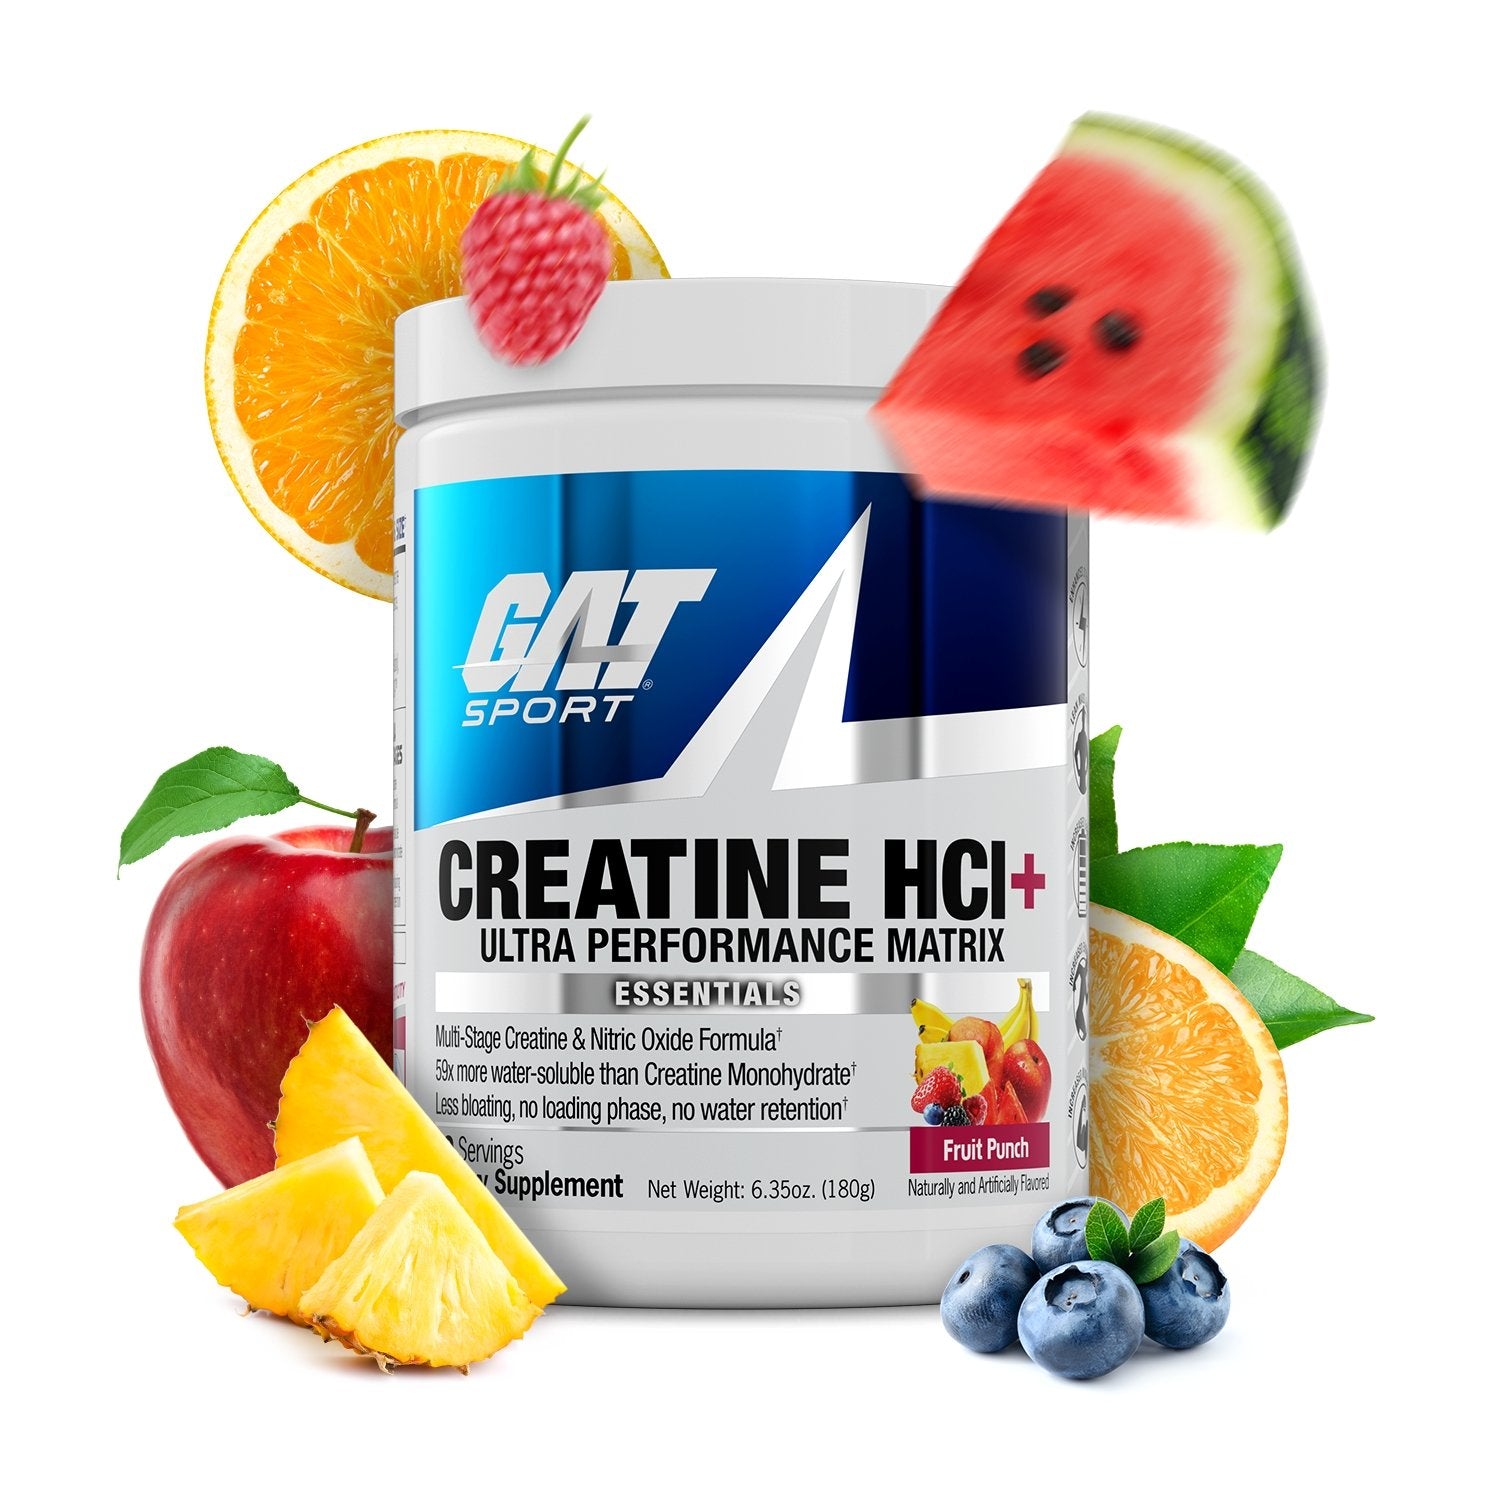  GAT SPORT Creatine Monohydrate Powder, Strength, Brain